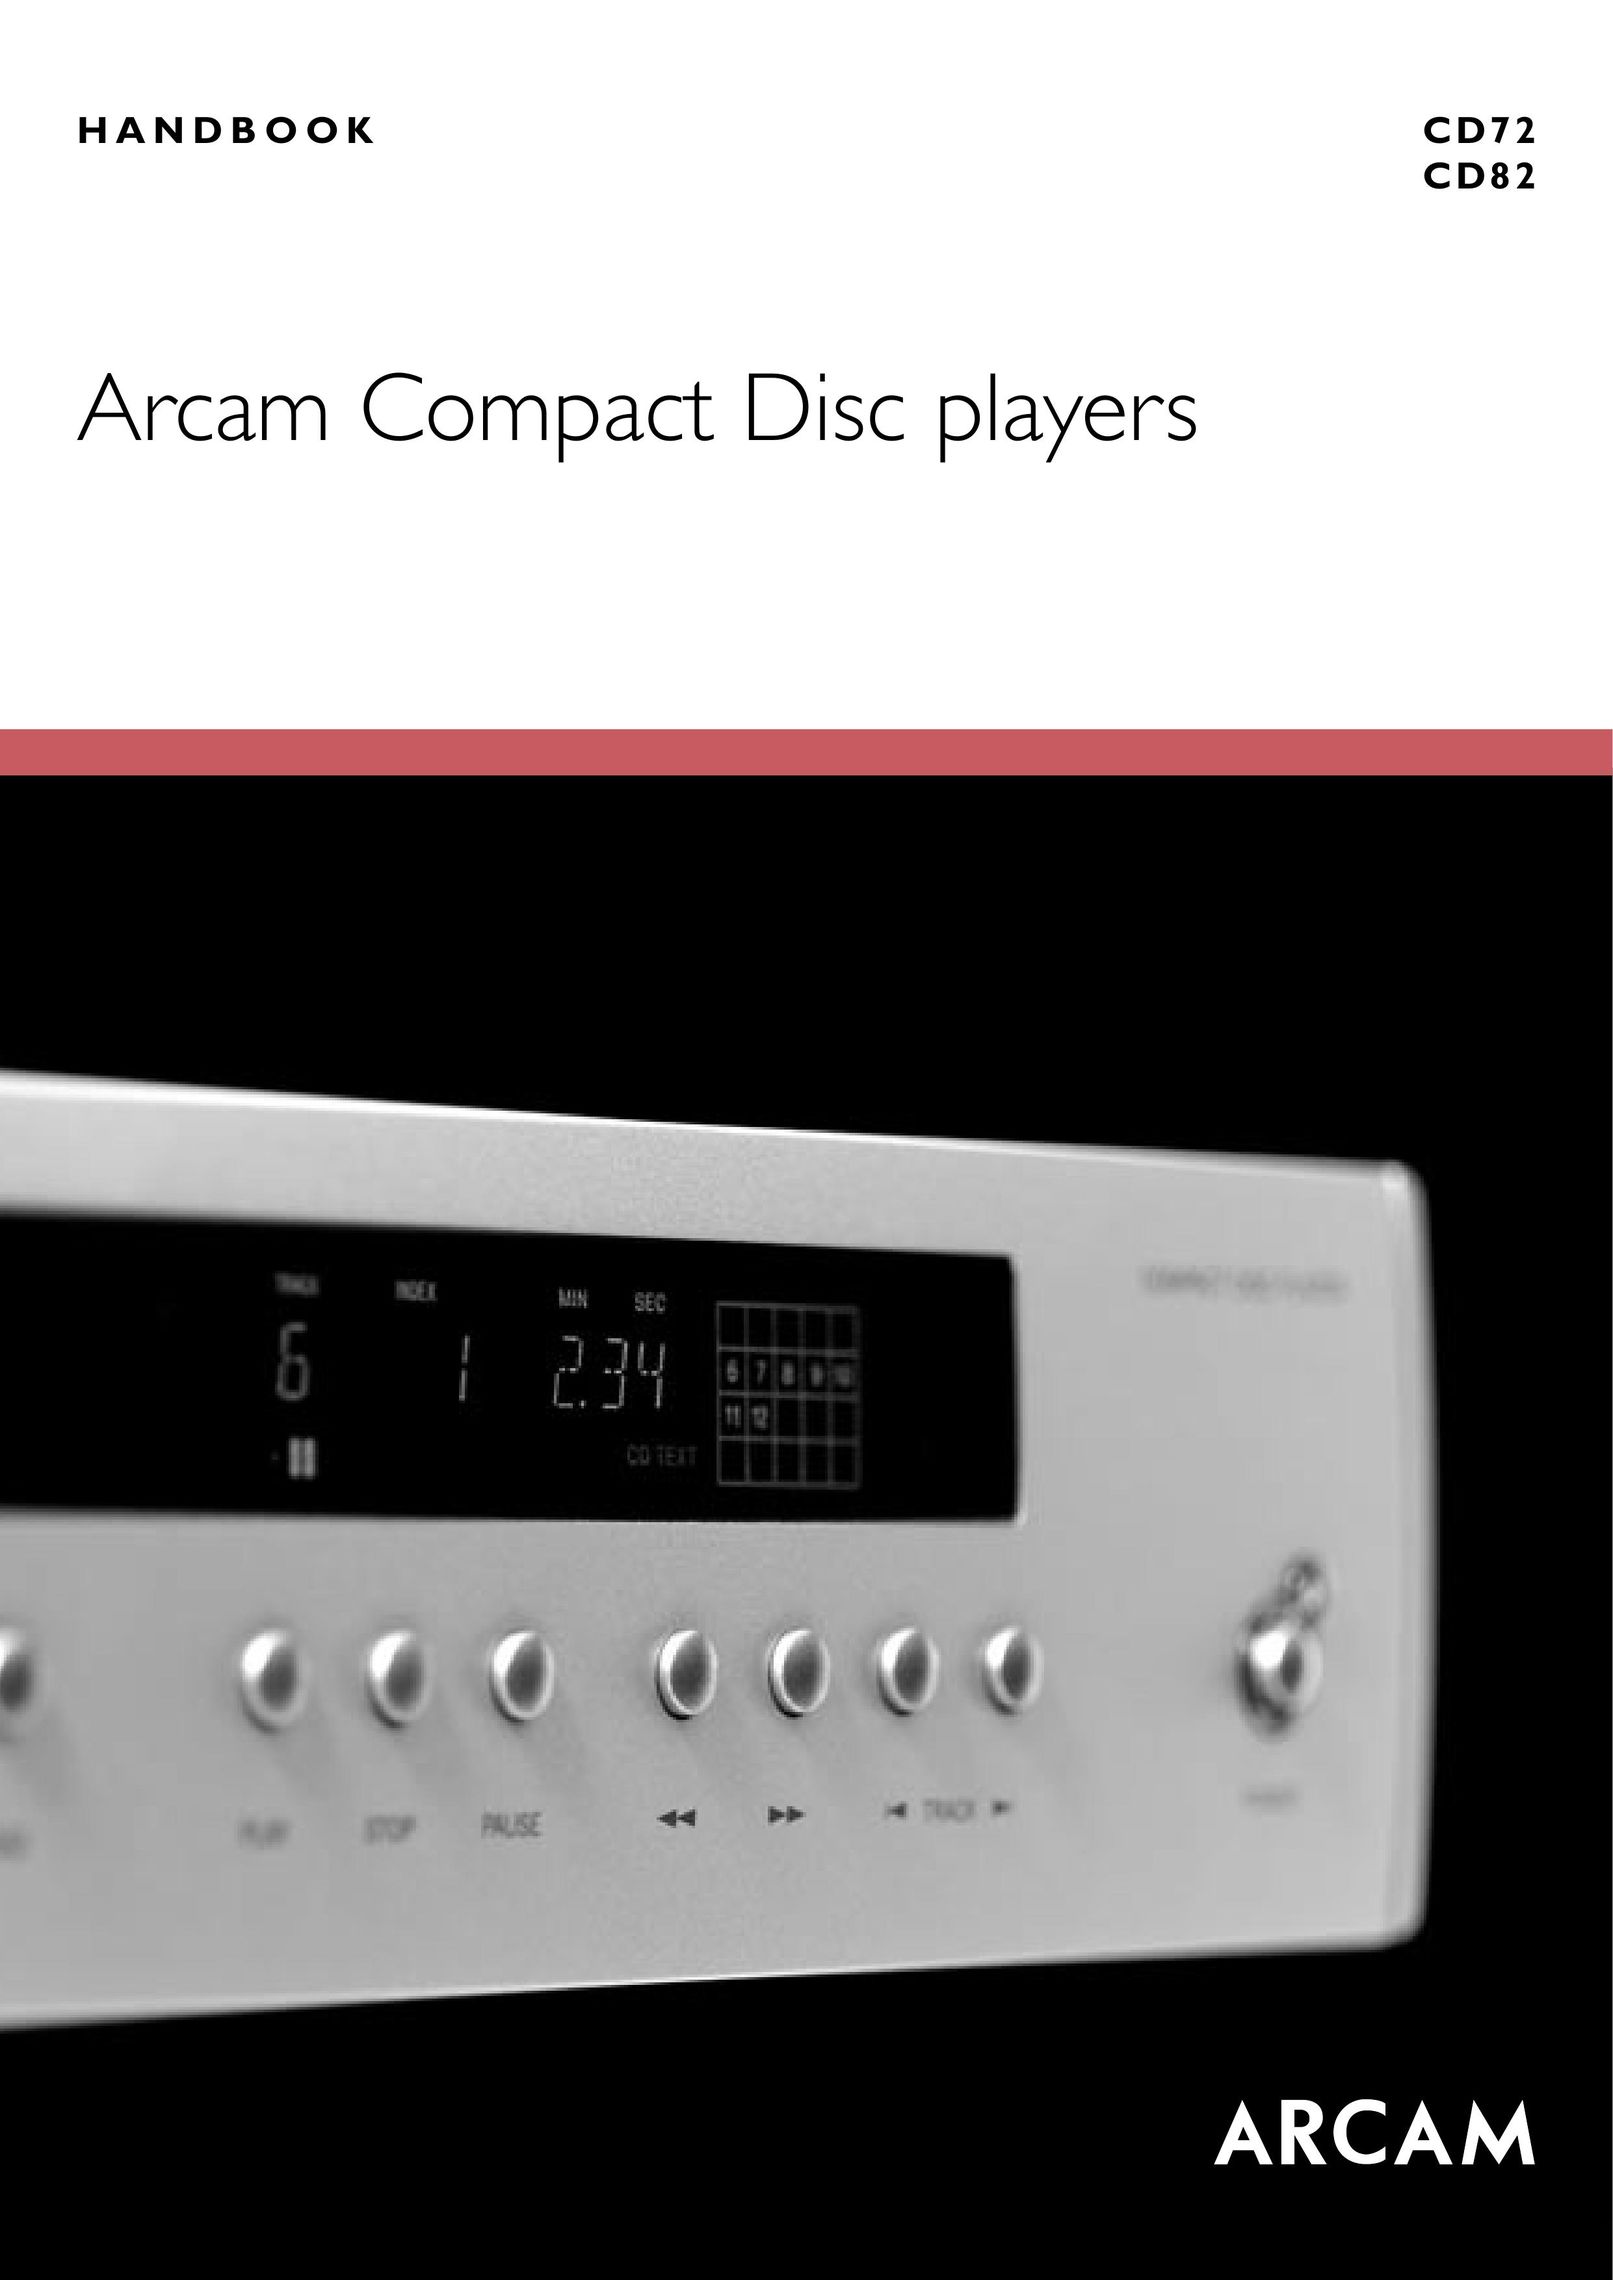 Arcam CD82 DVD Player User Manual